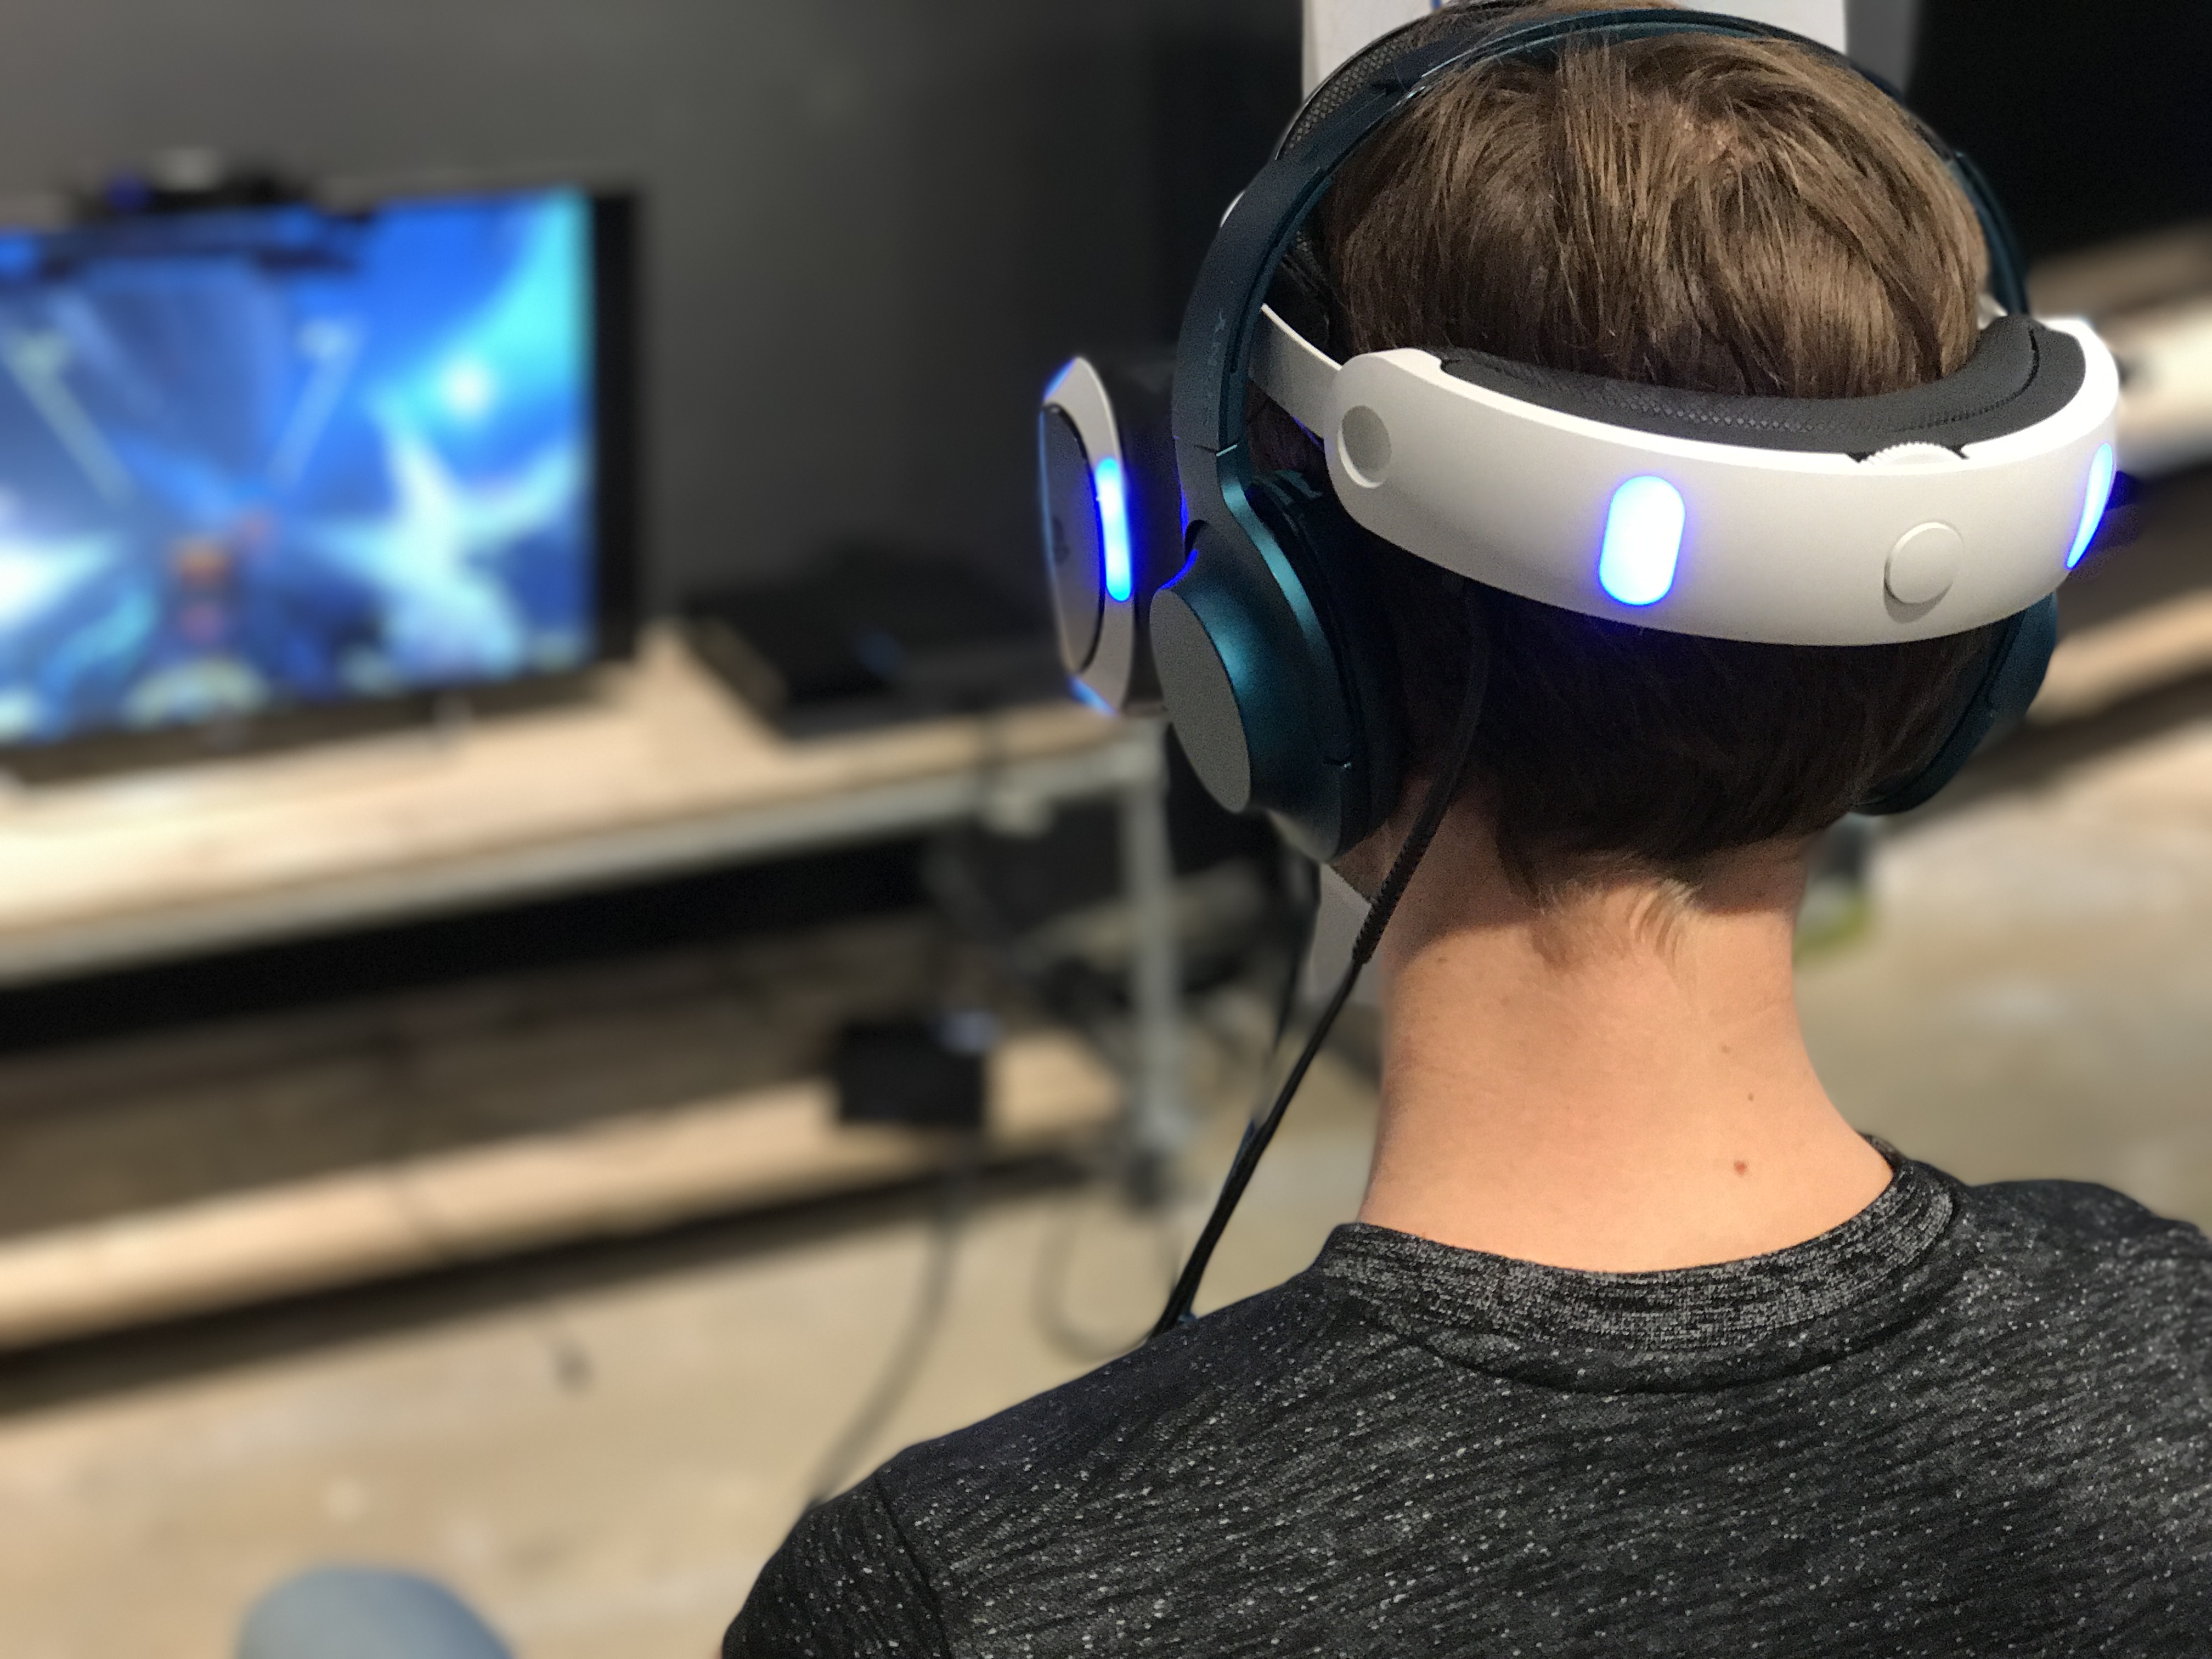 Video: PlayStation VR NWTV community event